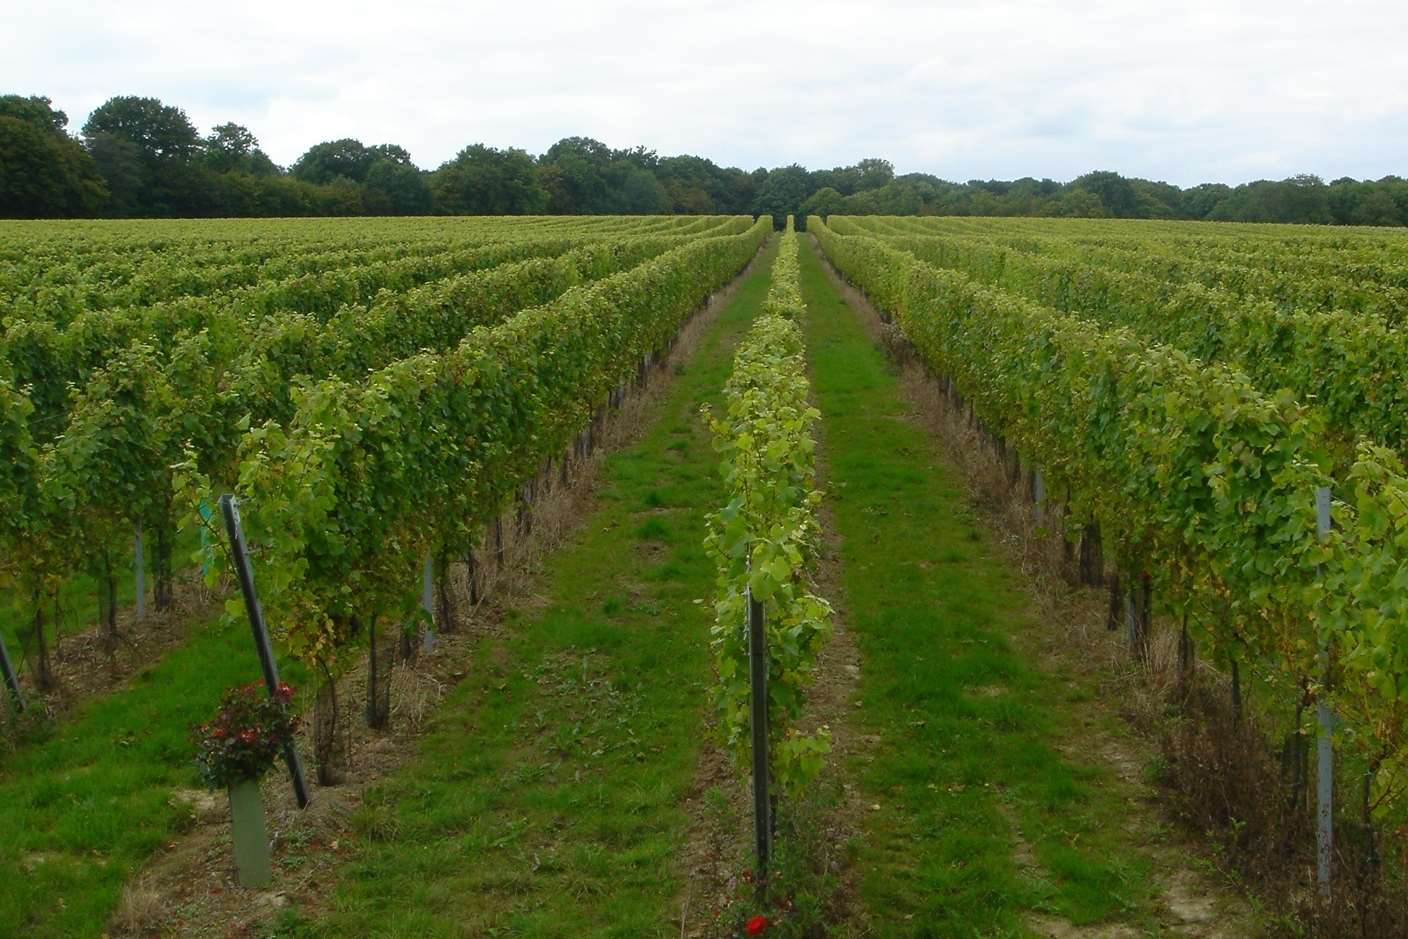 A vineyard at Gusbourne Estate in Appledore